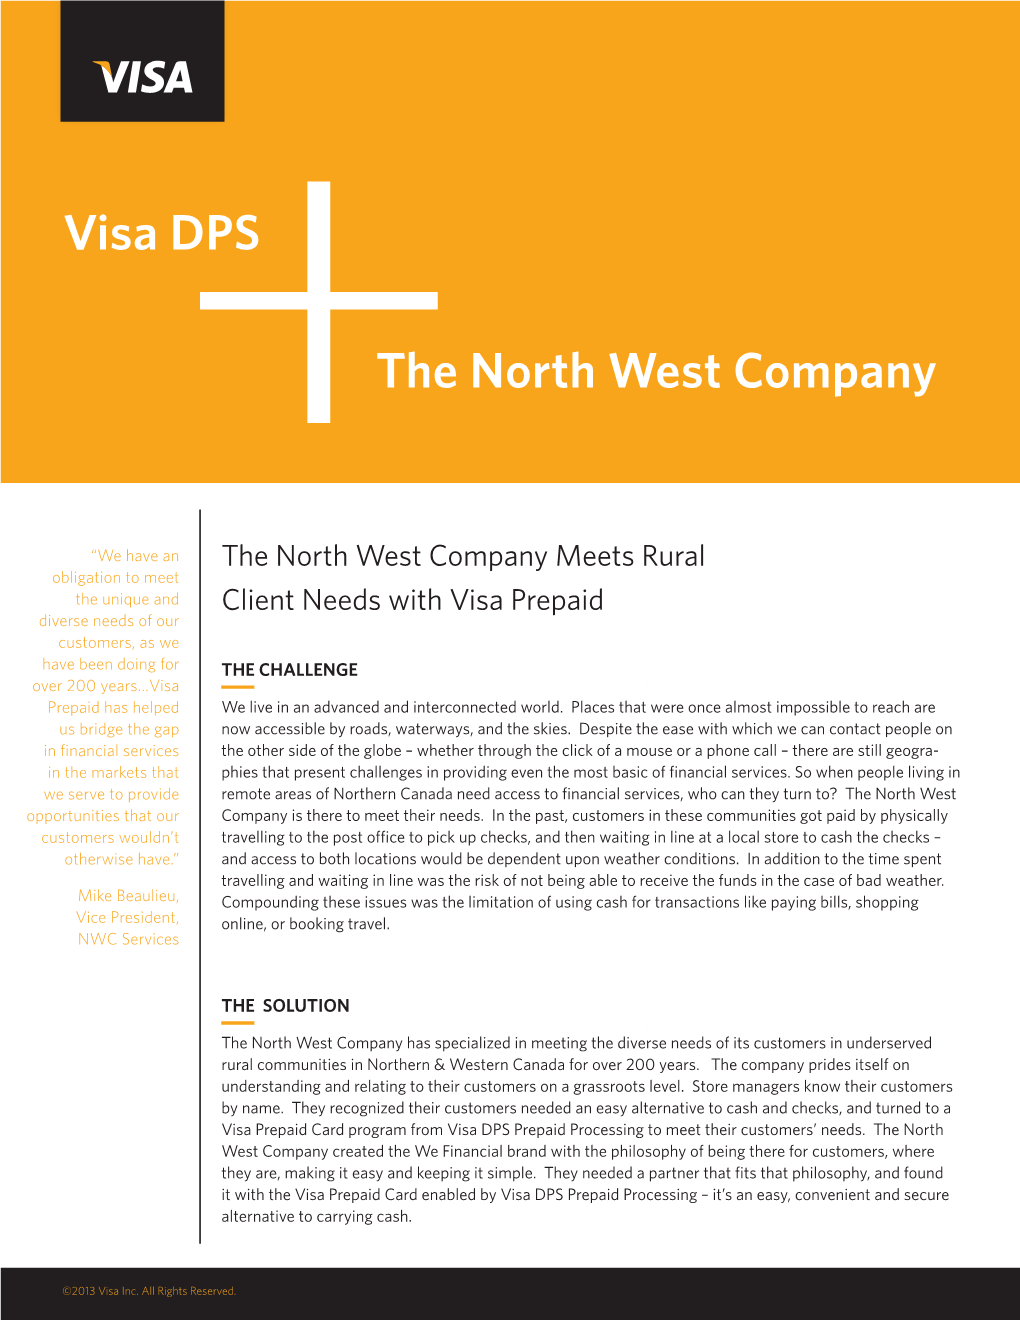 Visa DPS the North West Company